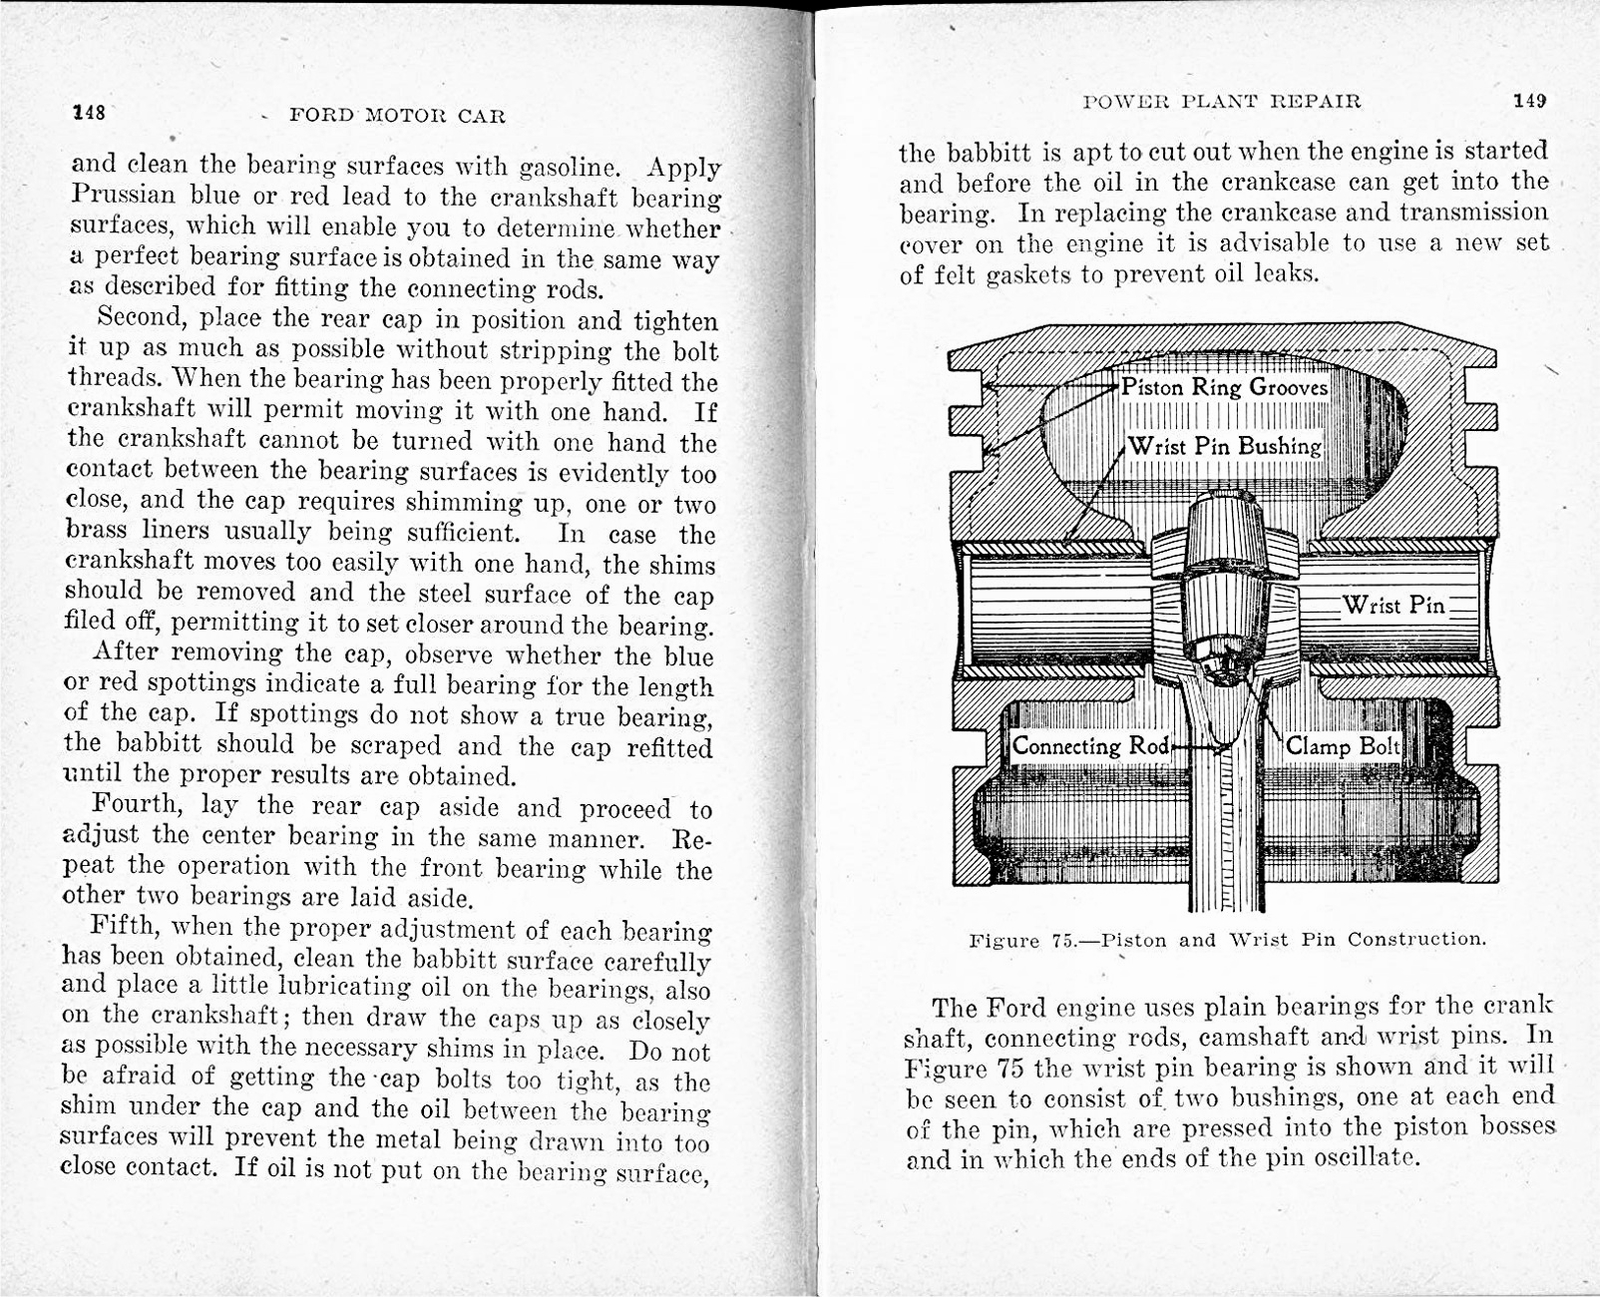 n_1917 Ford Car & Truck Manual-148-149.jpg